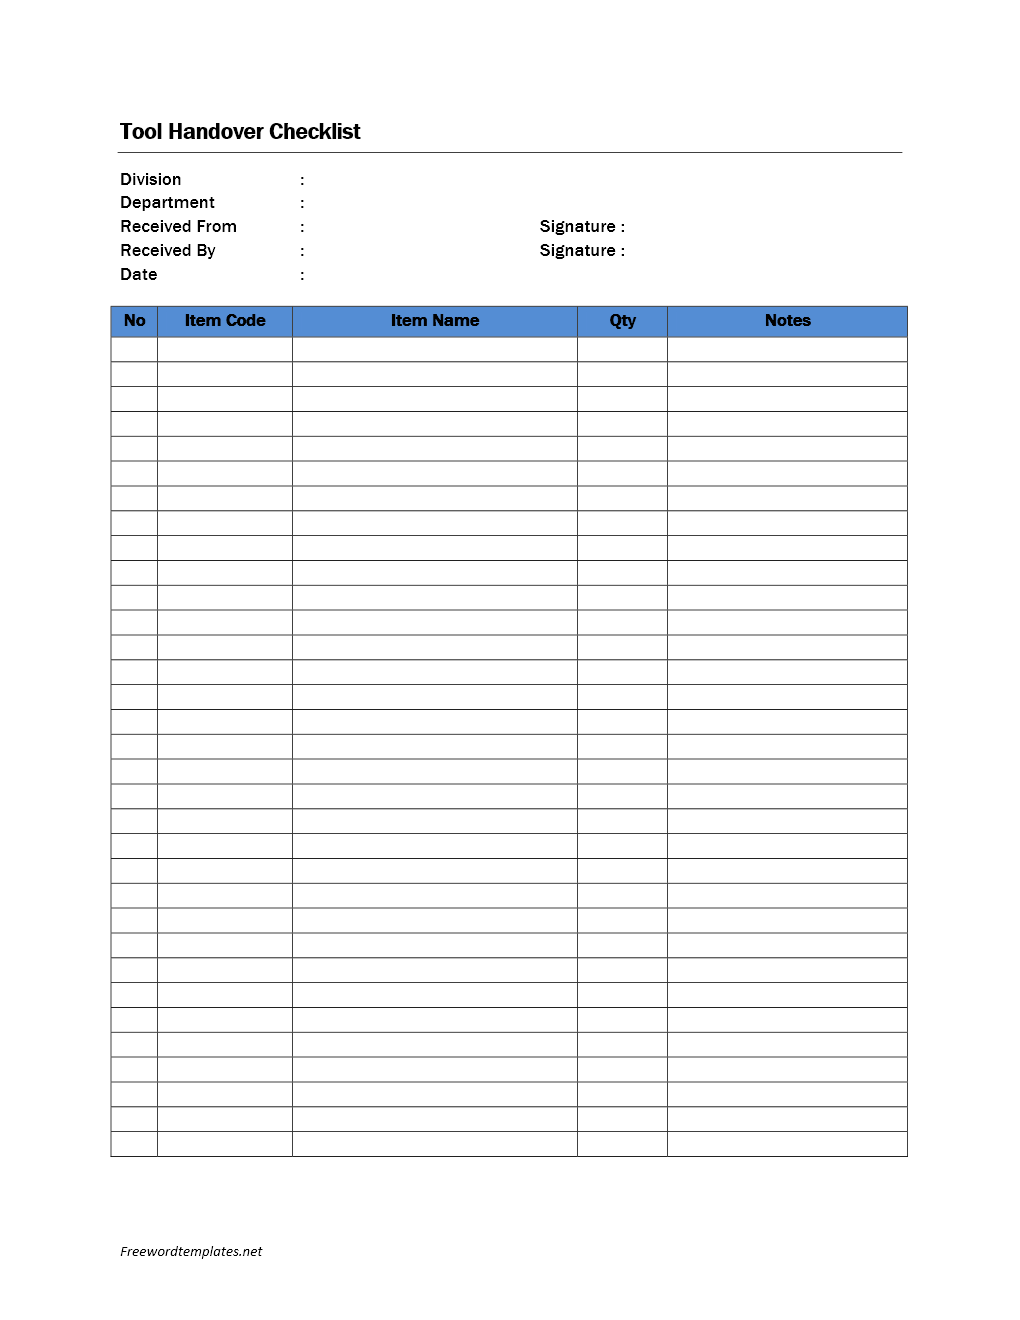 Tool Handover Checklist Template